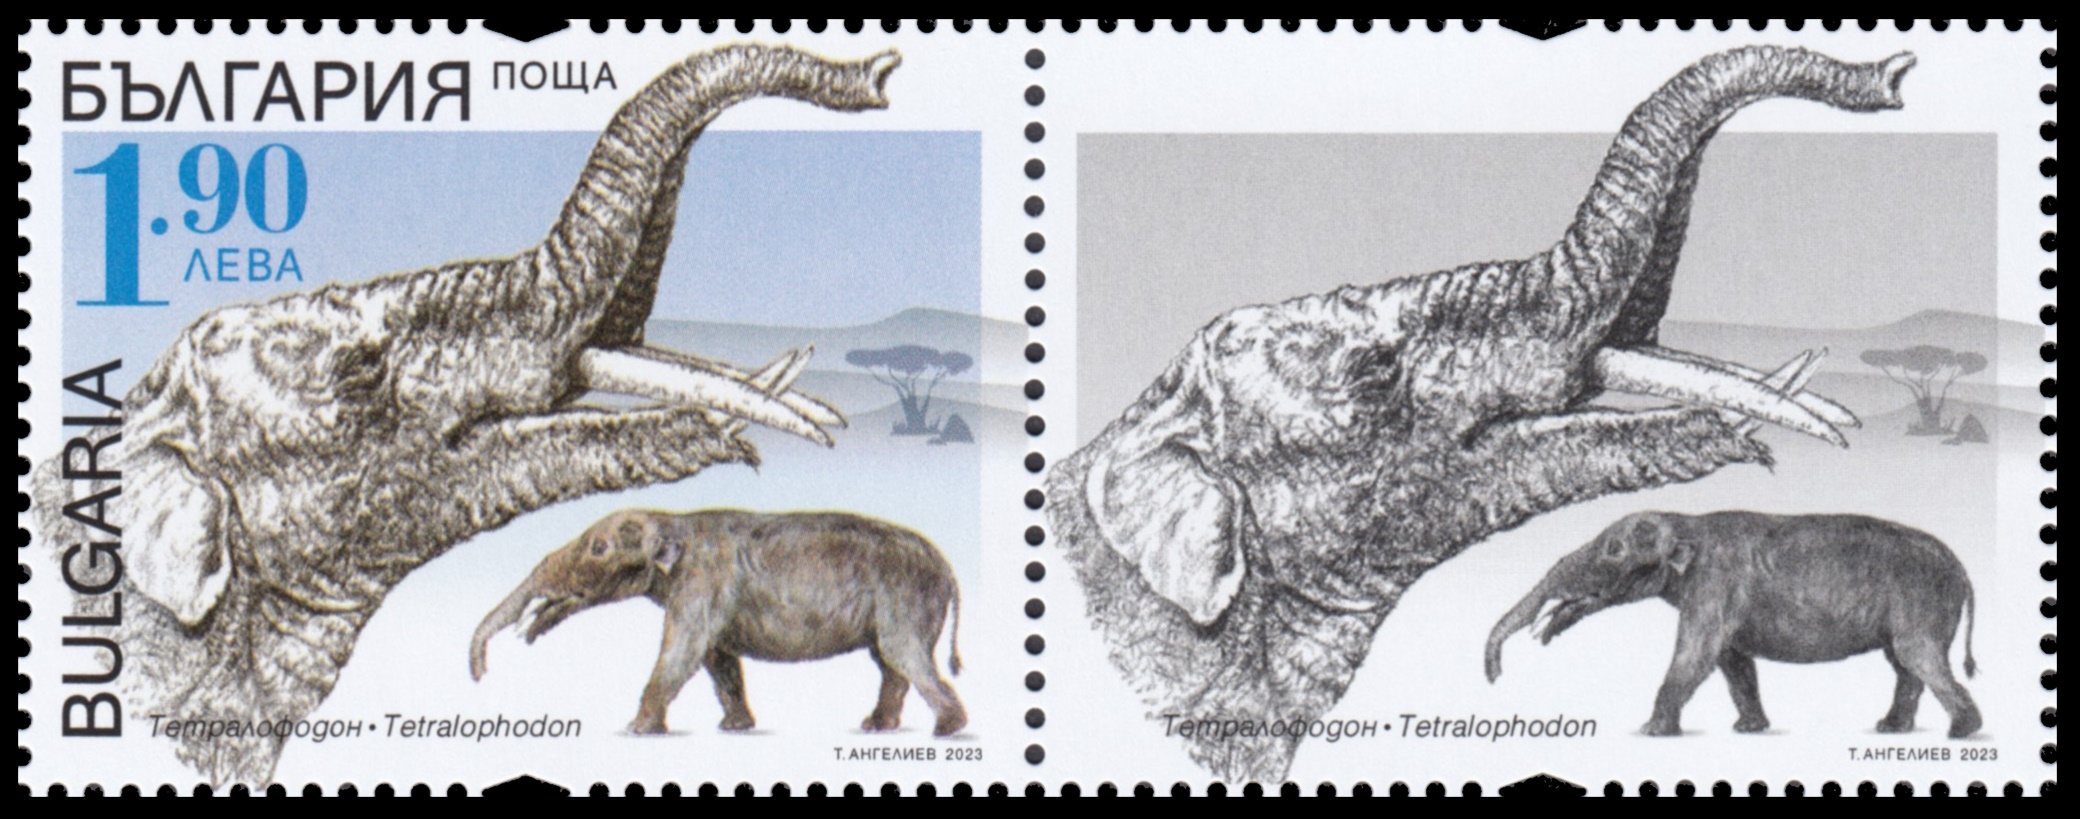 Tetralophodon on stamp of Bulgaria 2023